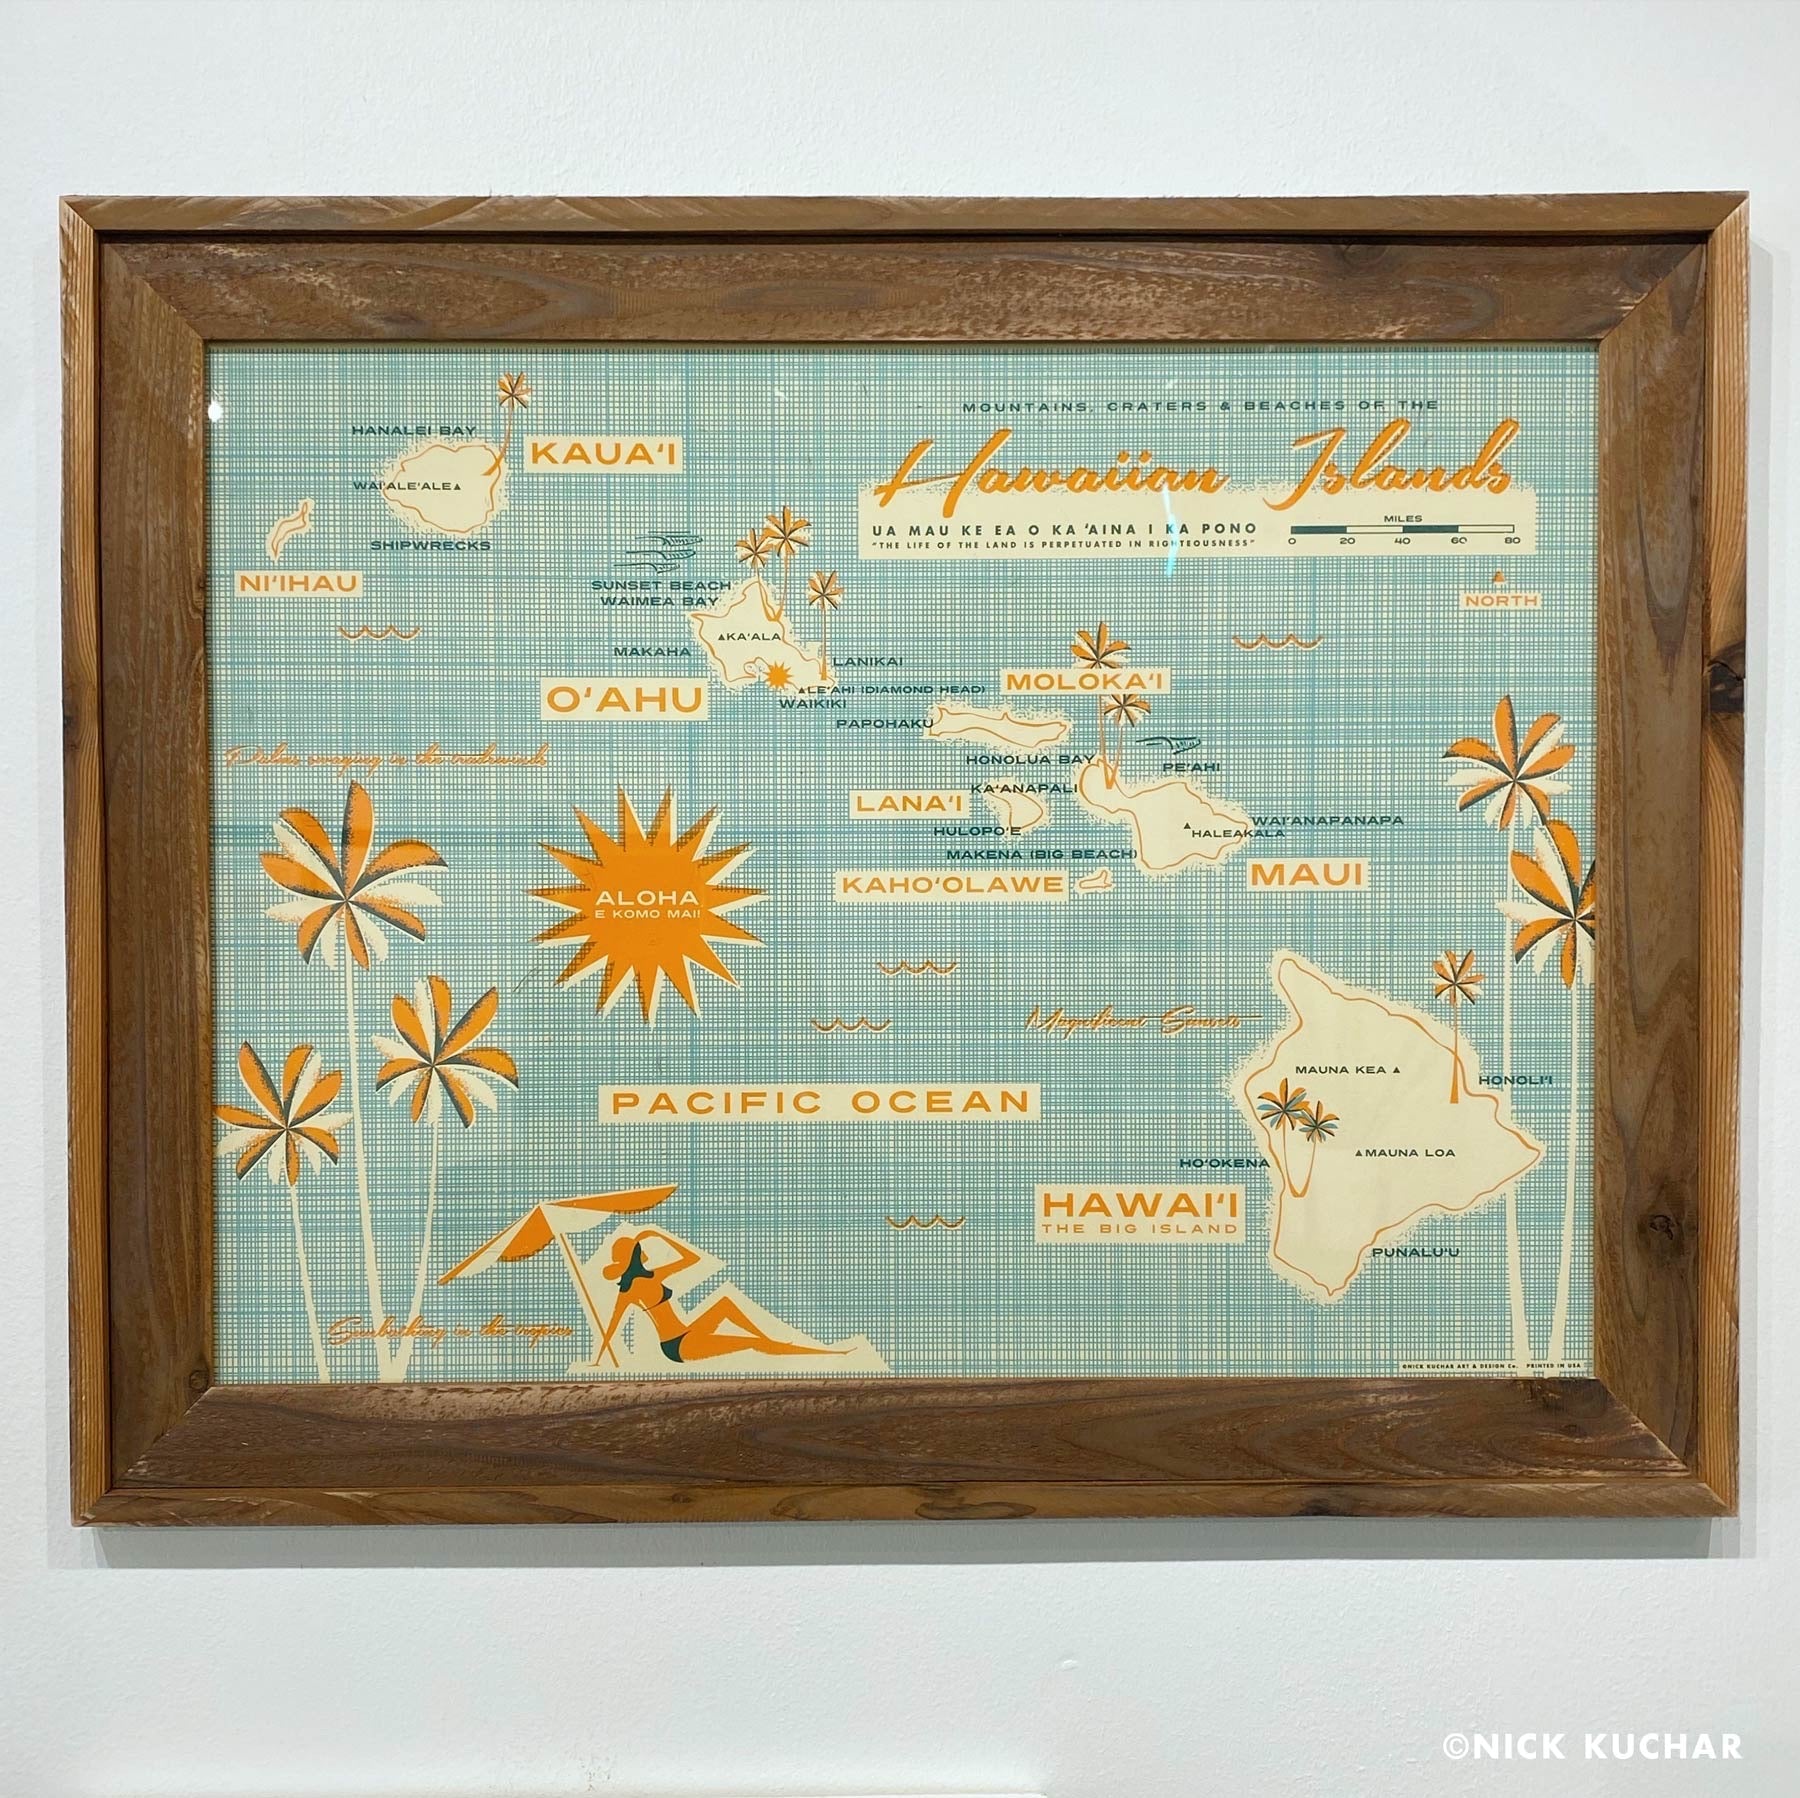 Barnwood handmade frame screen print Hawaiian Islands Map by Nick Kuchar